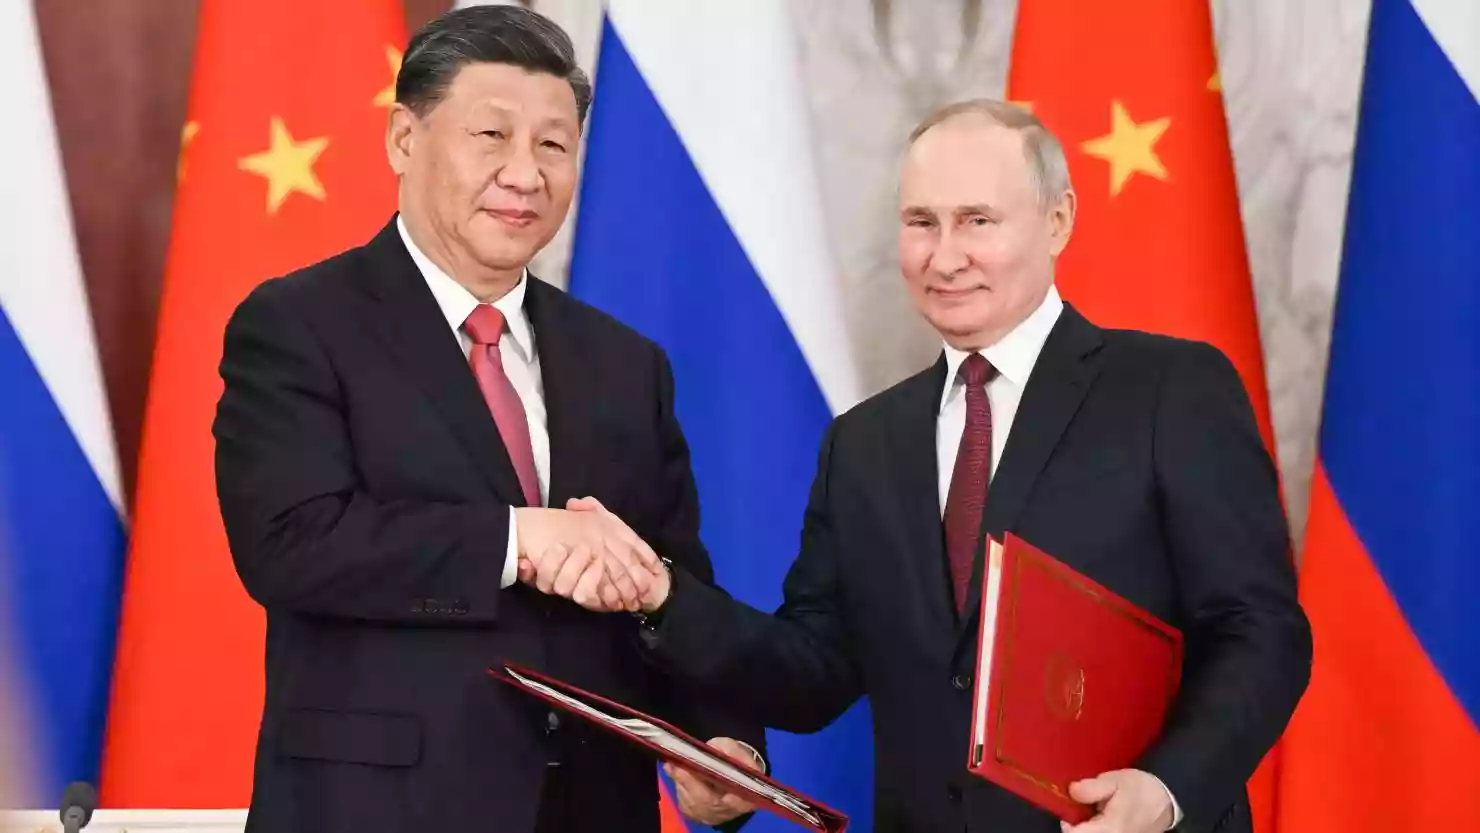 Putin and Xi Praise Strengthened Russia-China Alliance at SCO Summit